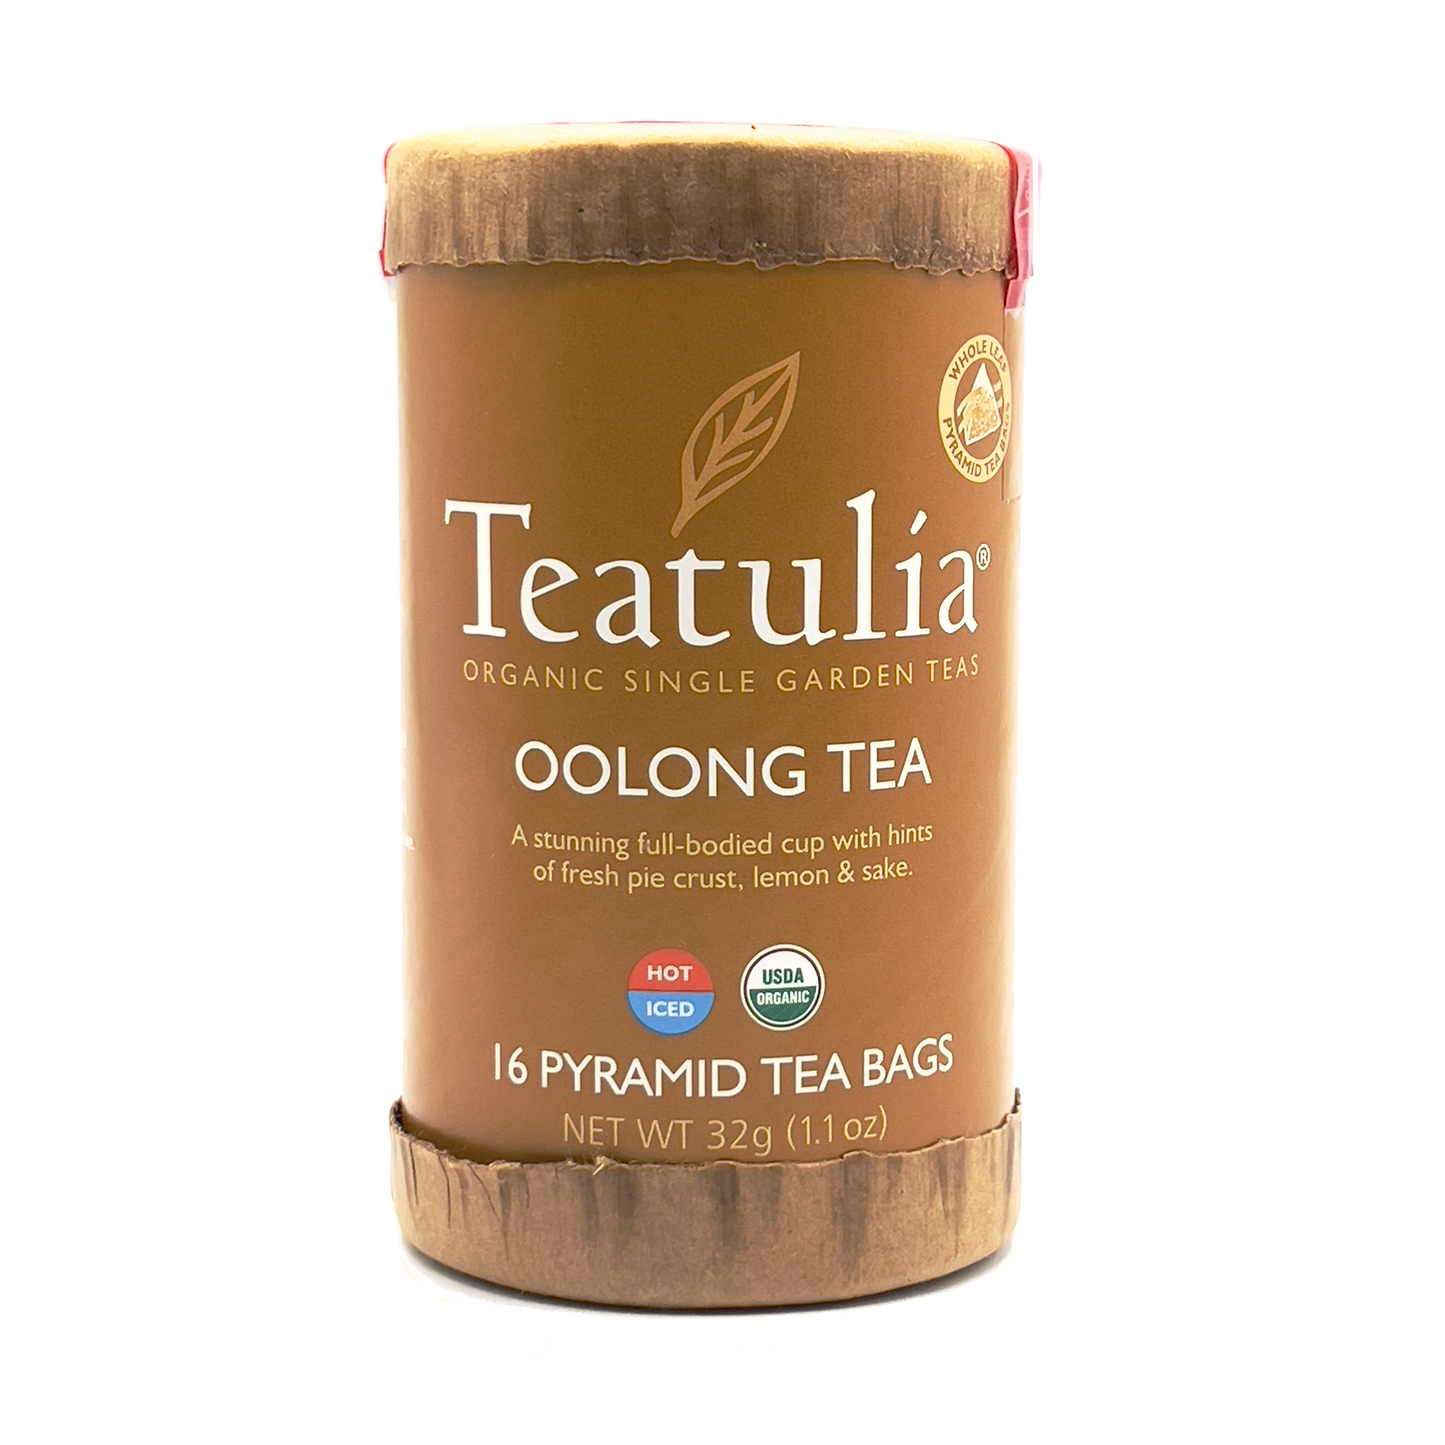 Teatulia Organic Tea, Oolong Tea